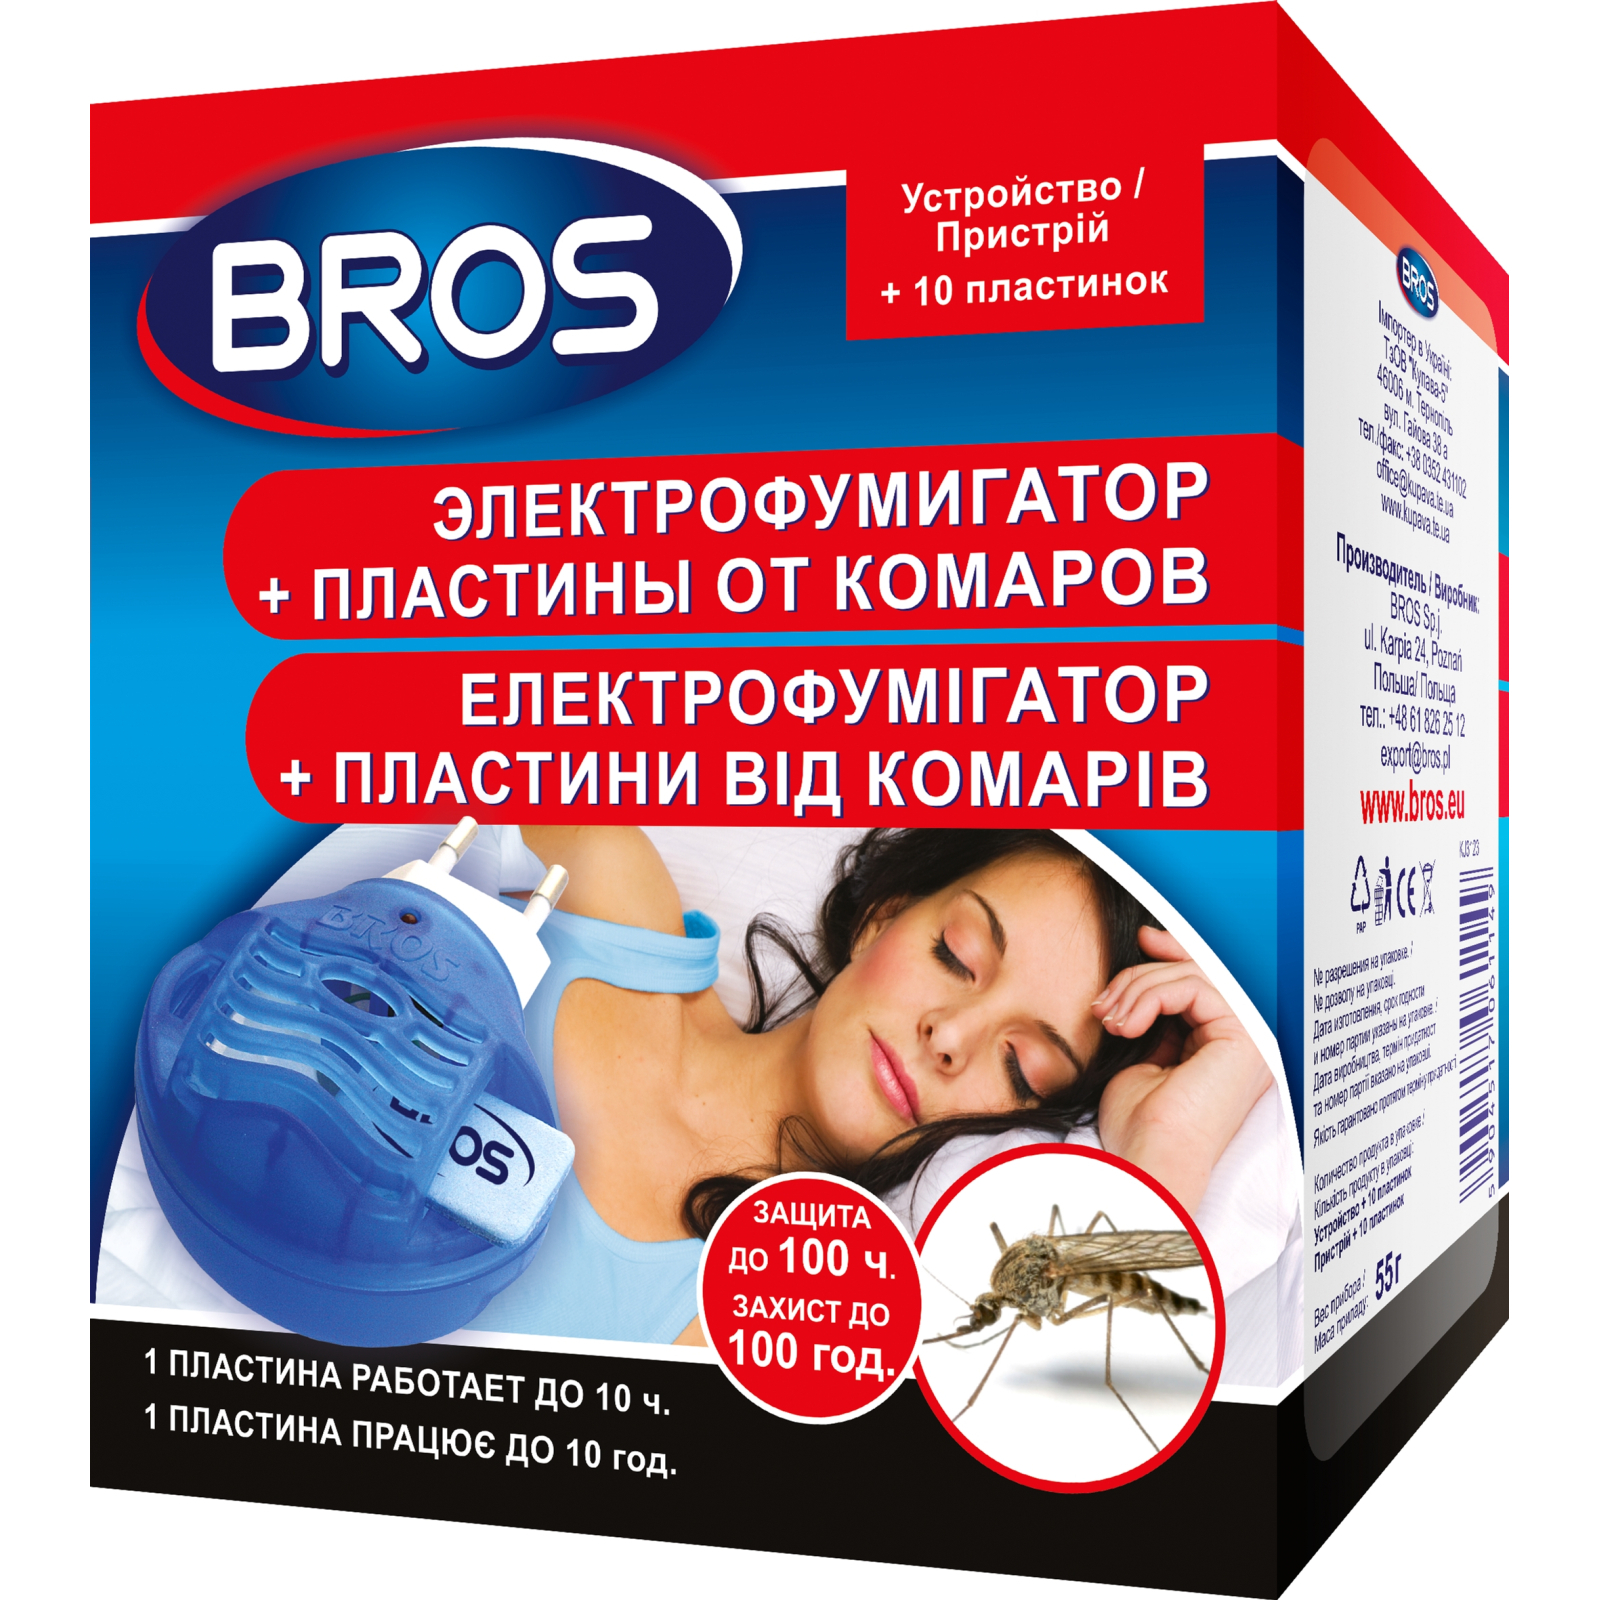 Фумигатор Bros + 10 пластин против комаров (5904517061149/5904517026193/5904517269446)